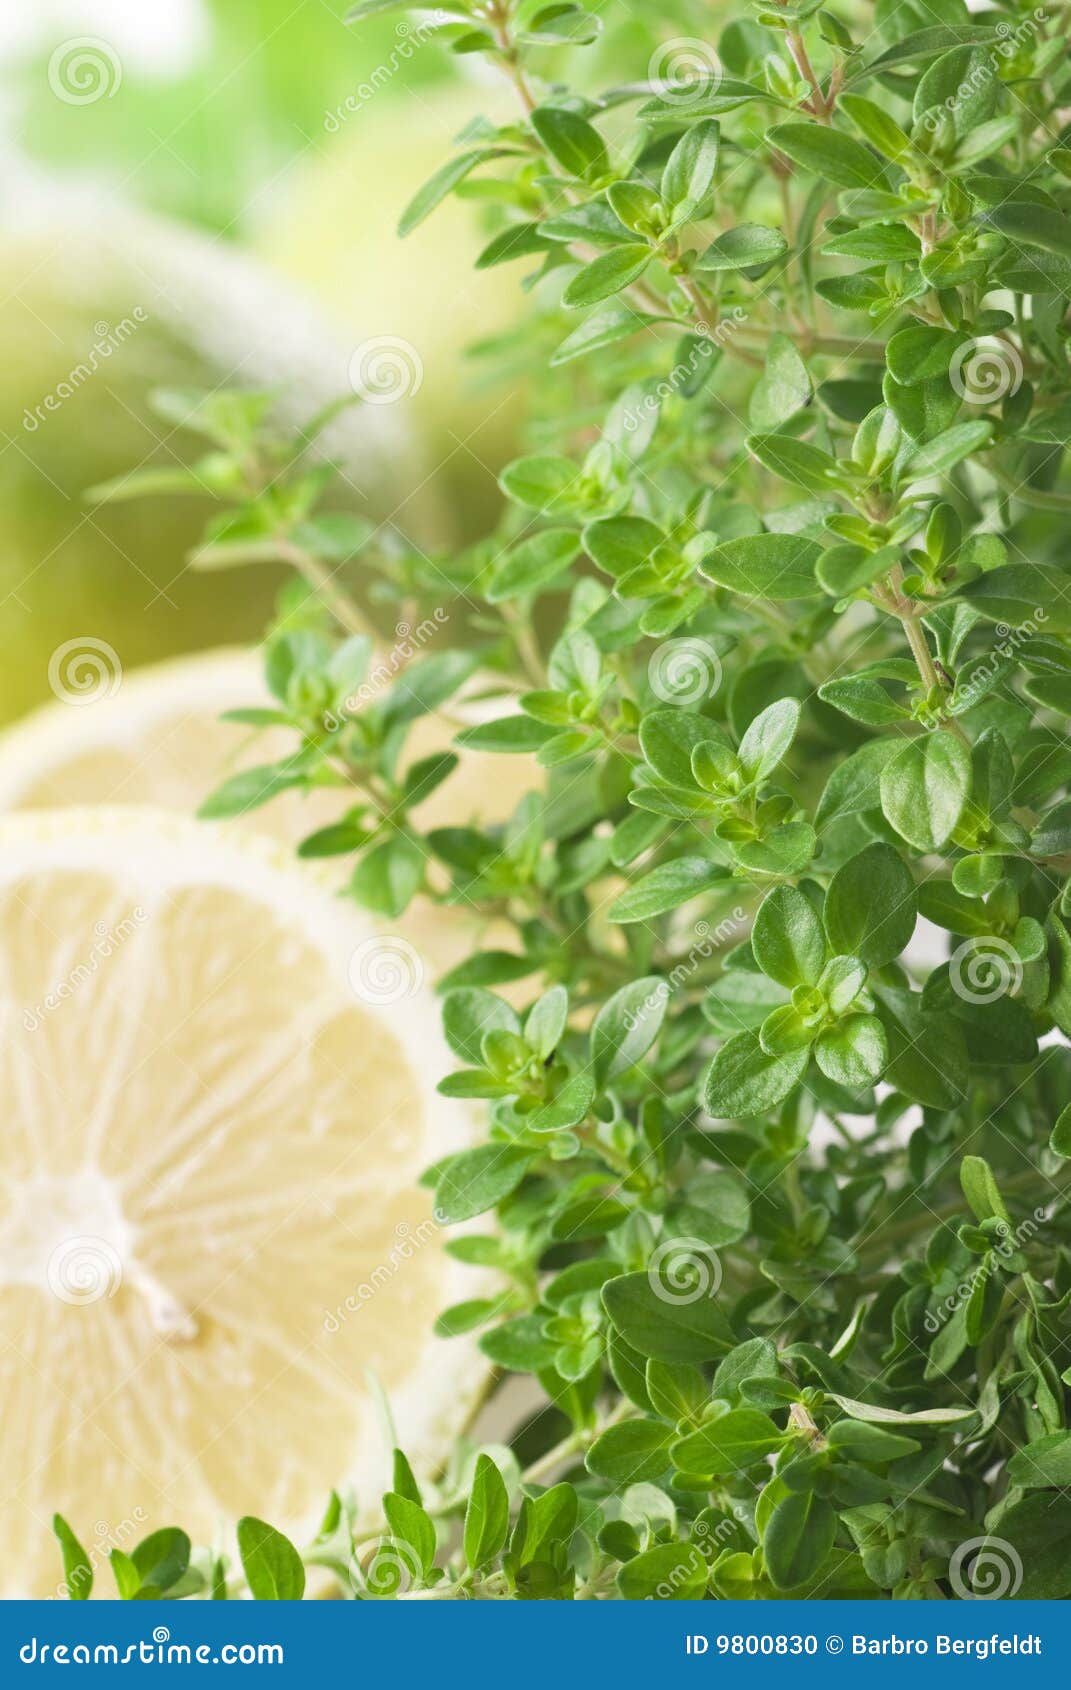 lemon-scented thyme